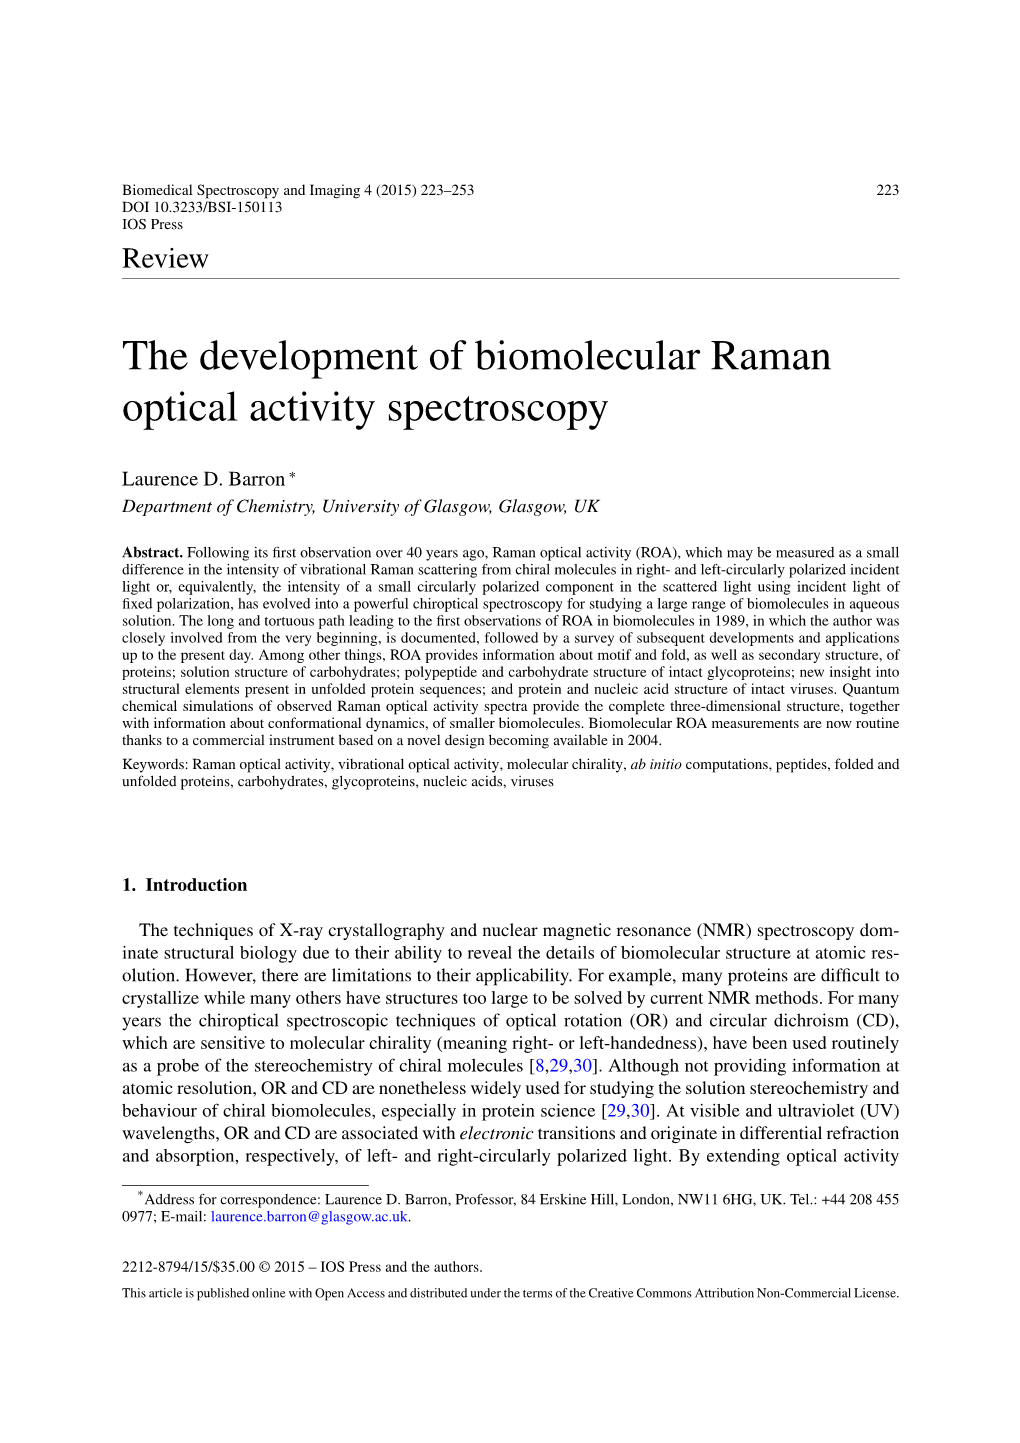 The Development of Biomolecular Raman Optical Activity Spectroscopy